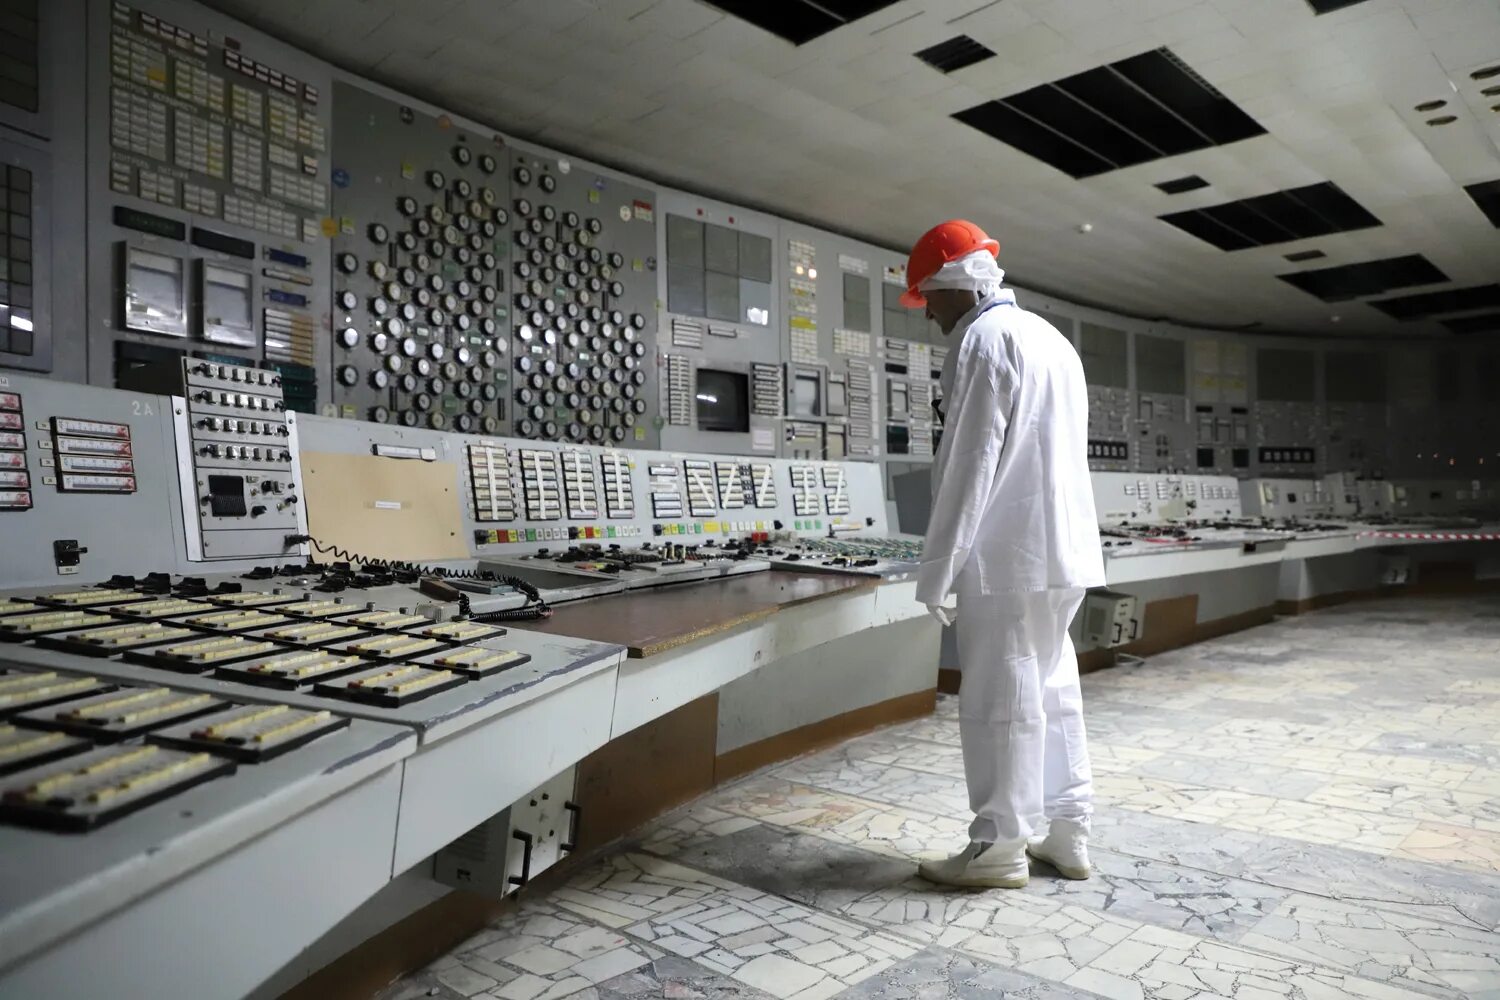 Включи чернобыльскую аэс. Реактор Чернобыльской АЭС. 4 Энергоблок ЧАЭС. АЭС Припять 4 энергоблок. Реактор 4 энергоблока ЧАЭС.